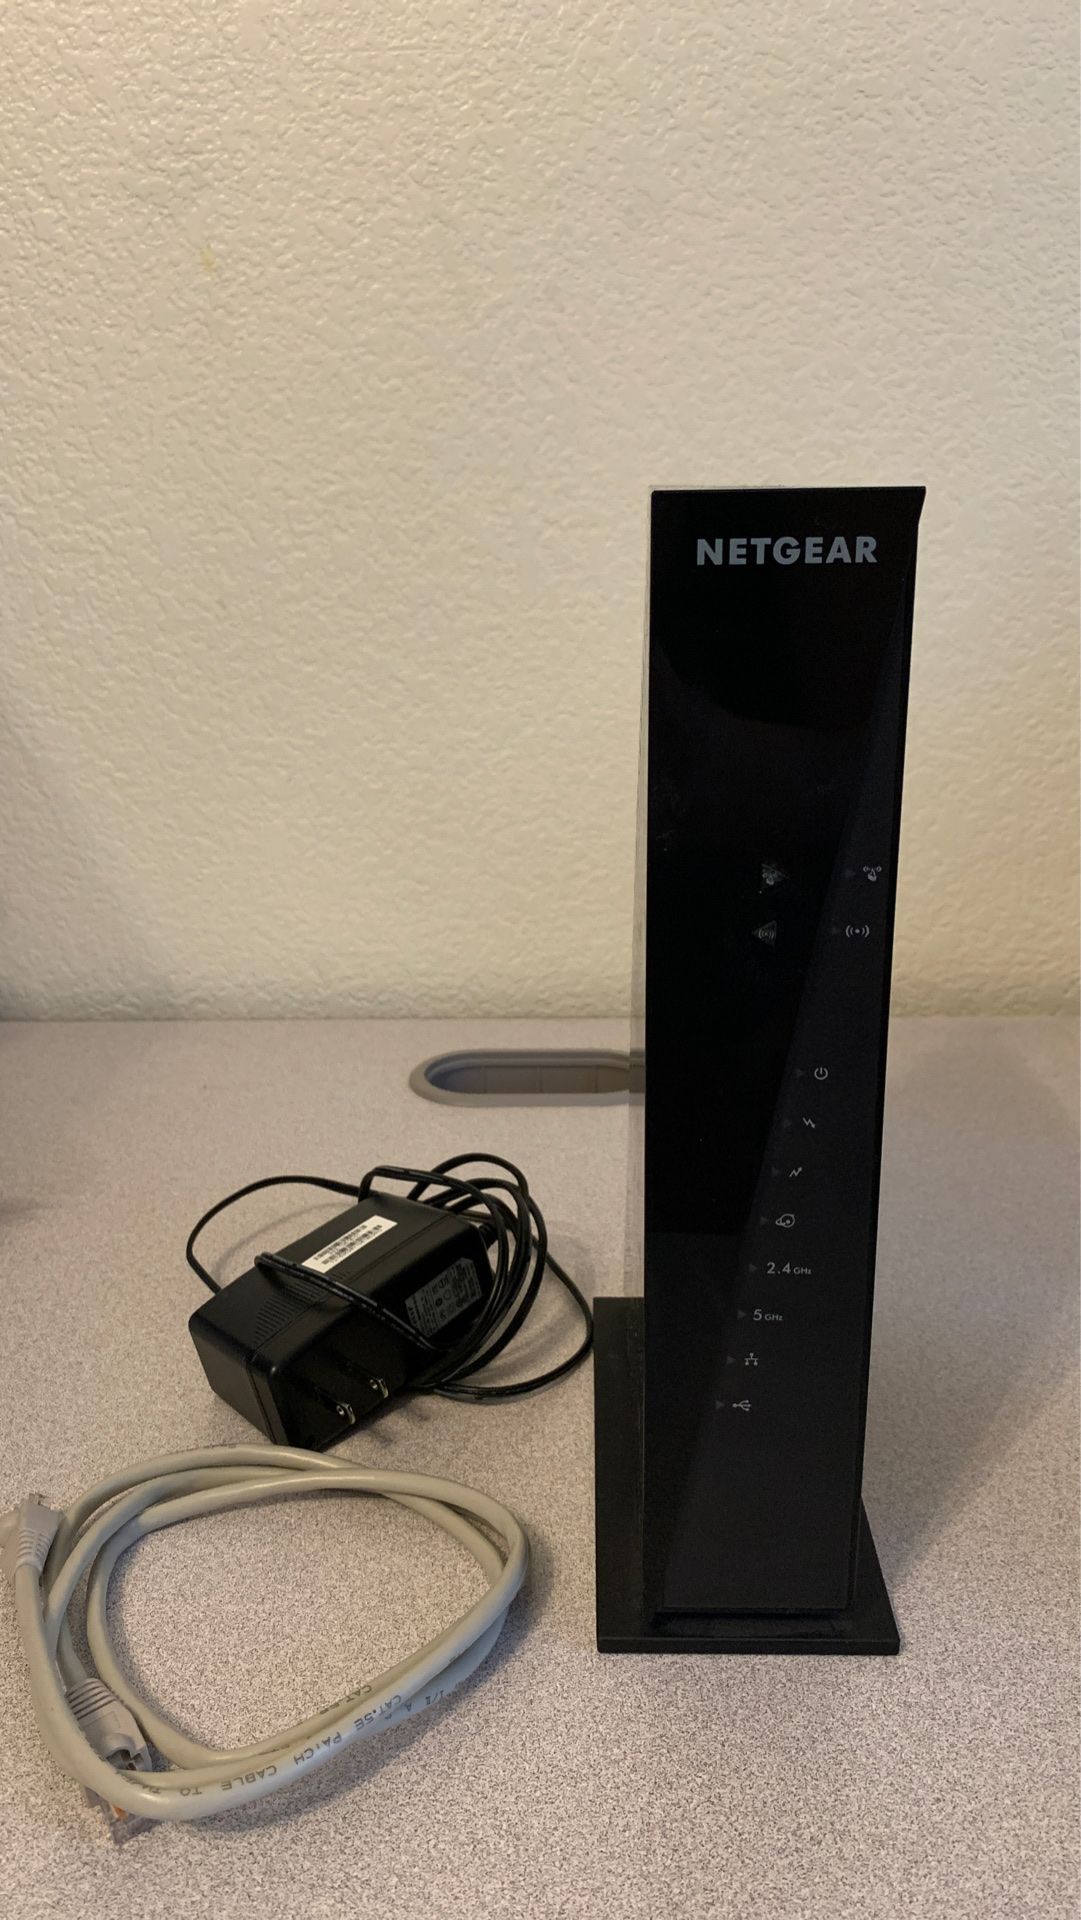 NETGEAR Modem Wi-Fi Router